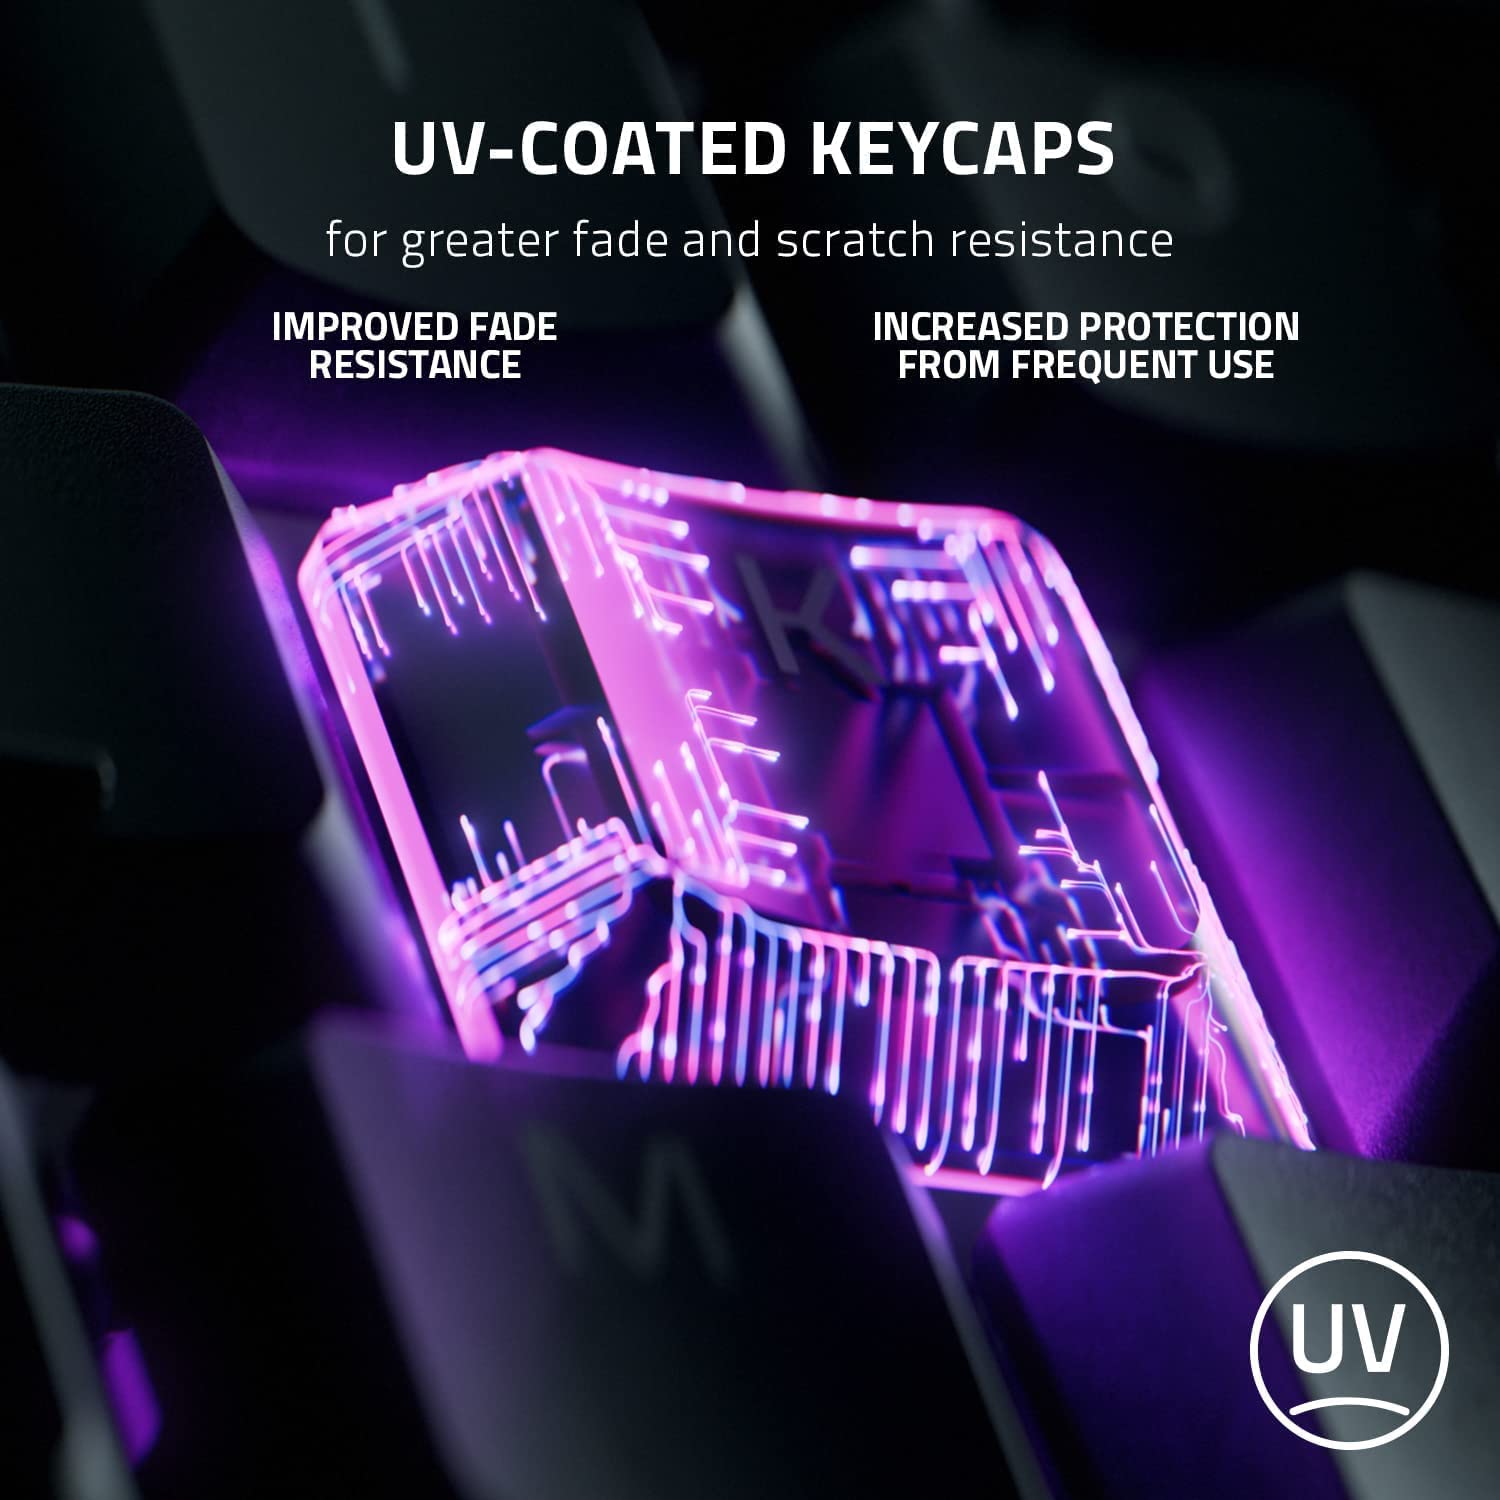 Razer Ornata V3 Wired RGB Membrane Gaming Keyboard, Mecha-Membrane Switches (US Layout) - Black